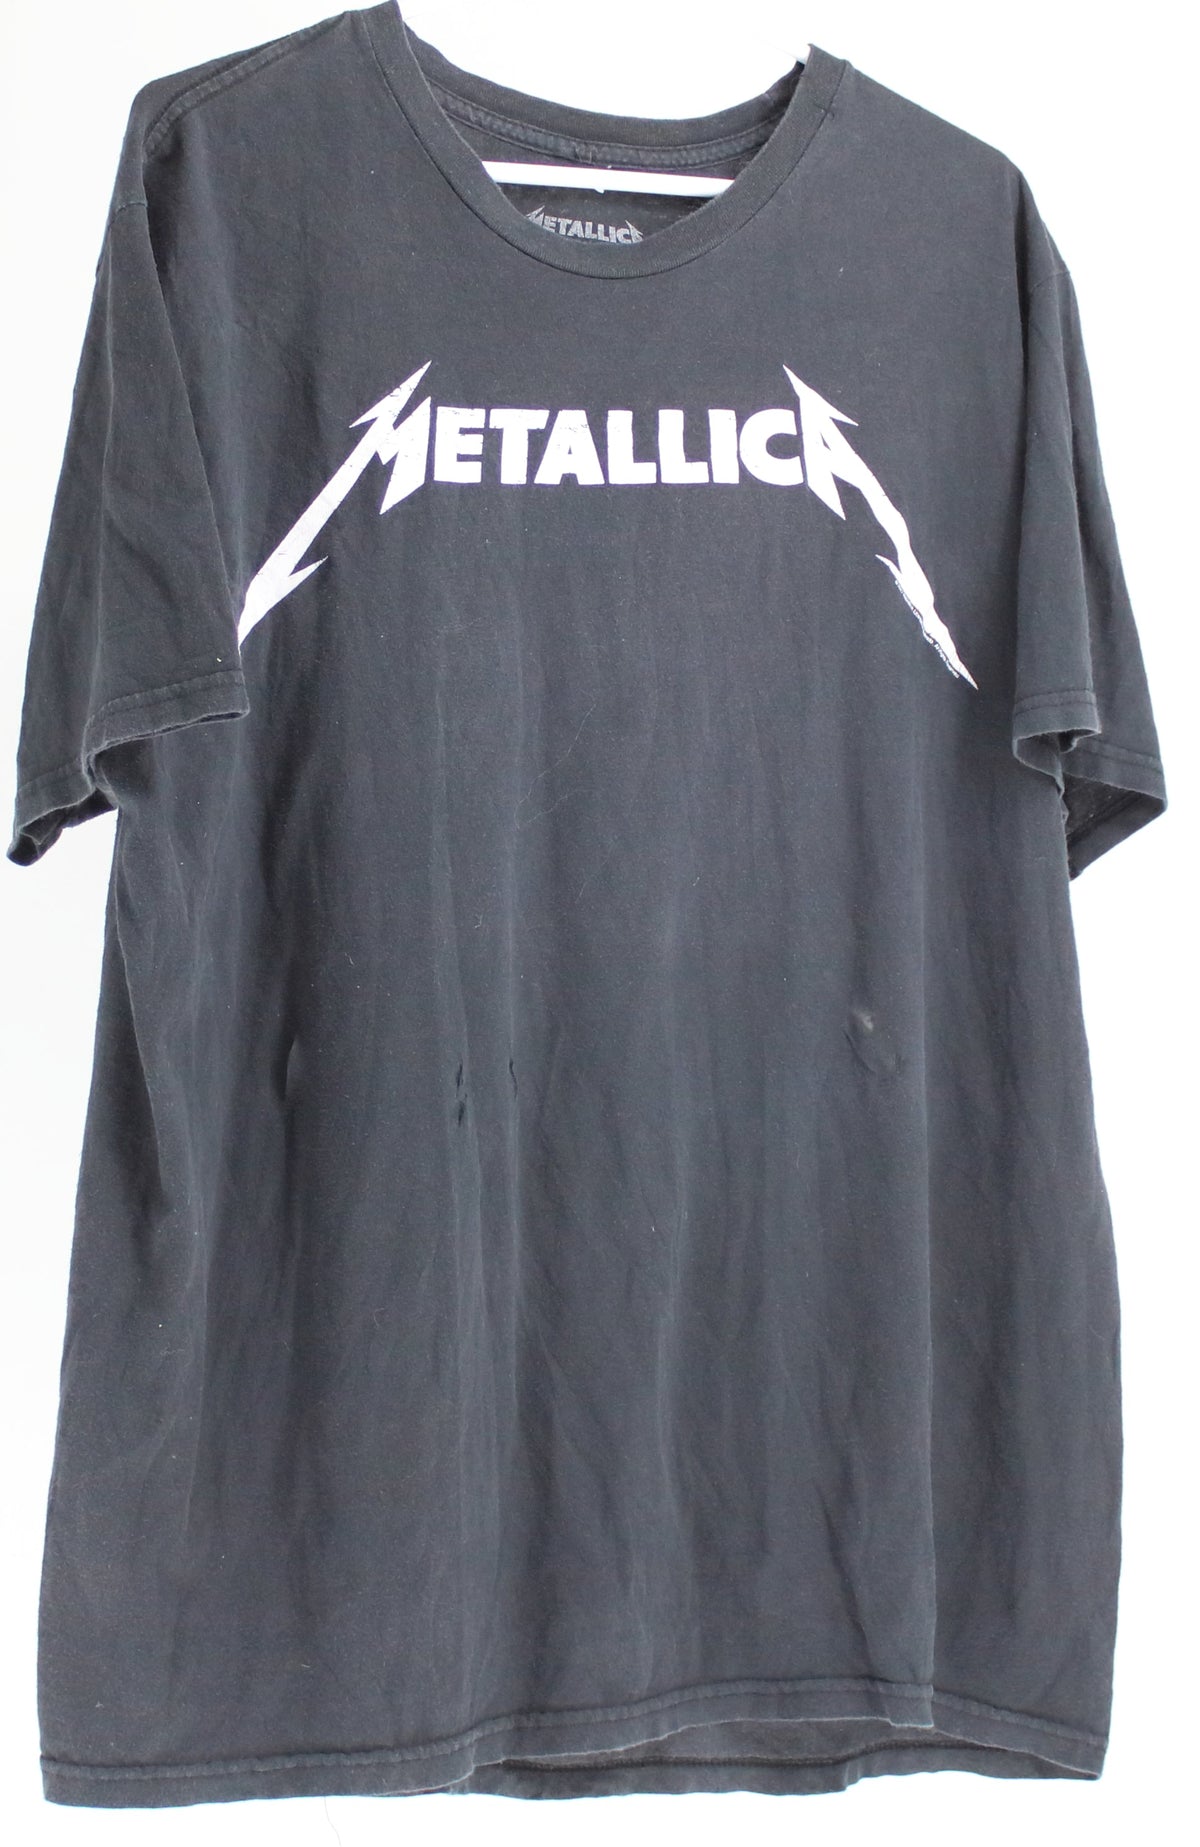 Metallic Black Front Graphic T-Shirt